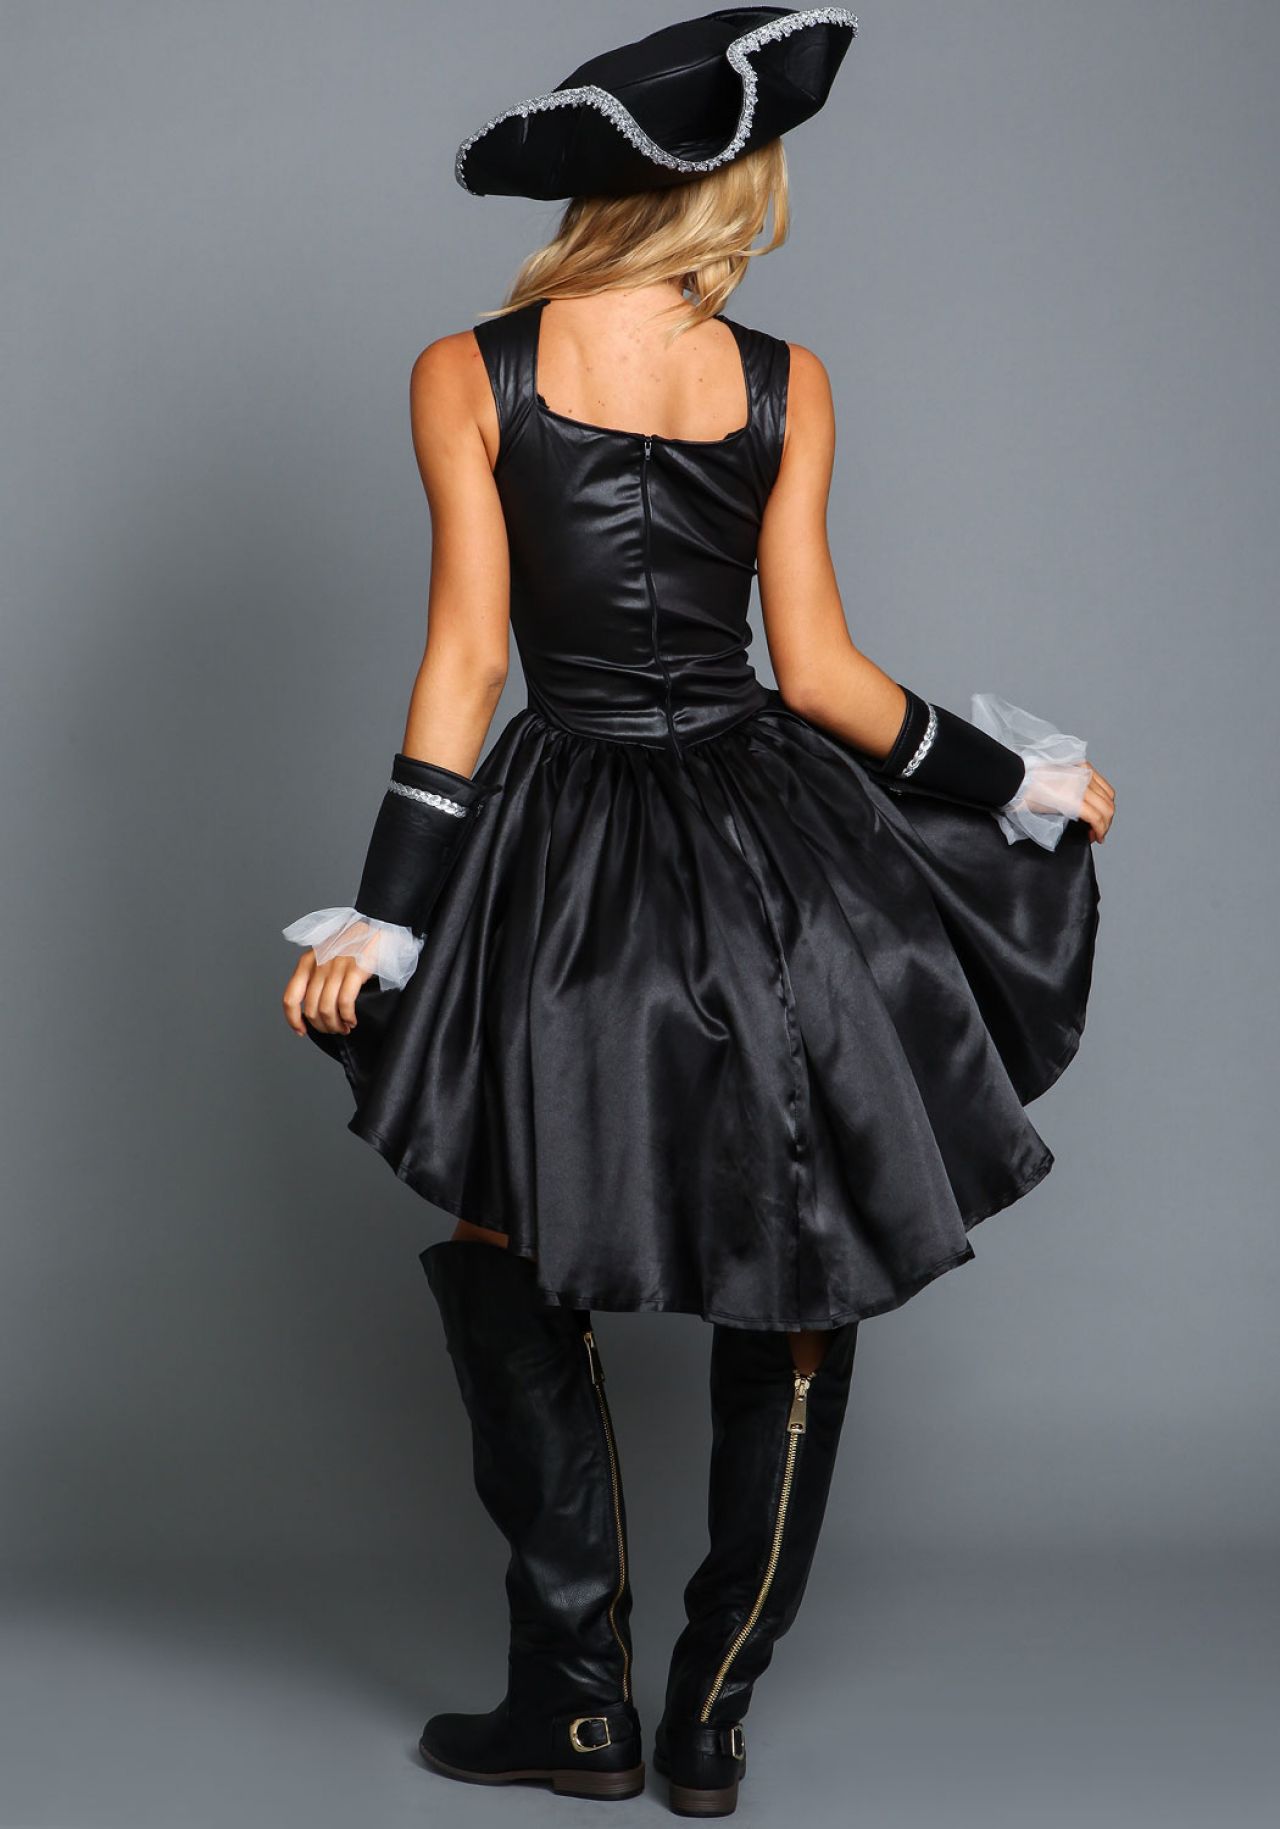 Alexis Ren Love Culture Halloween Costumes Photoshoot Celebmafia